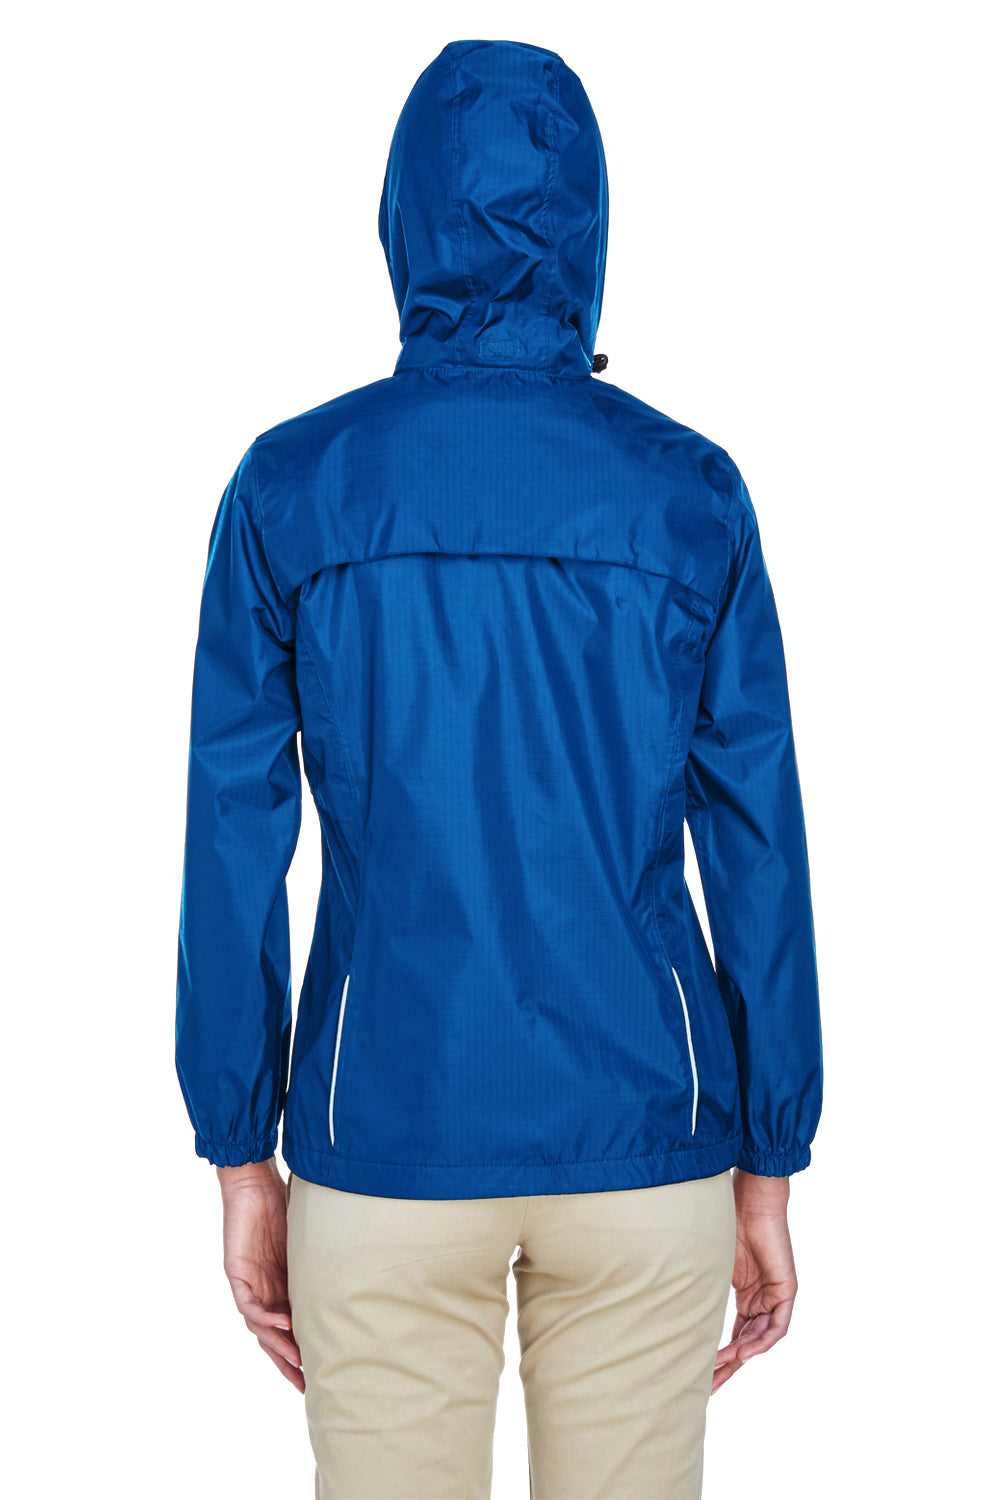 Core 365 78185 Womens Climate Waterproof Full Zip Hooded Jacket Royal Blue Back